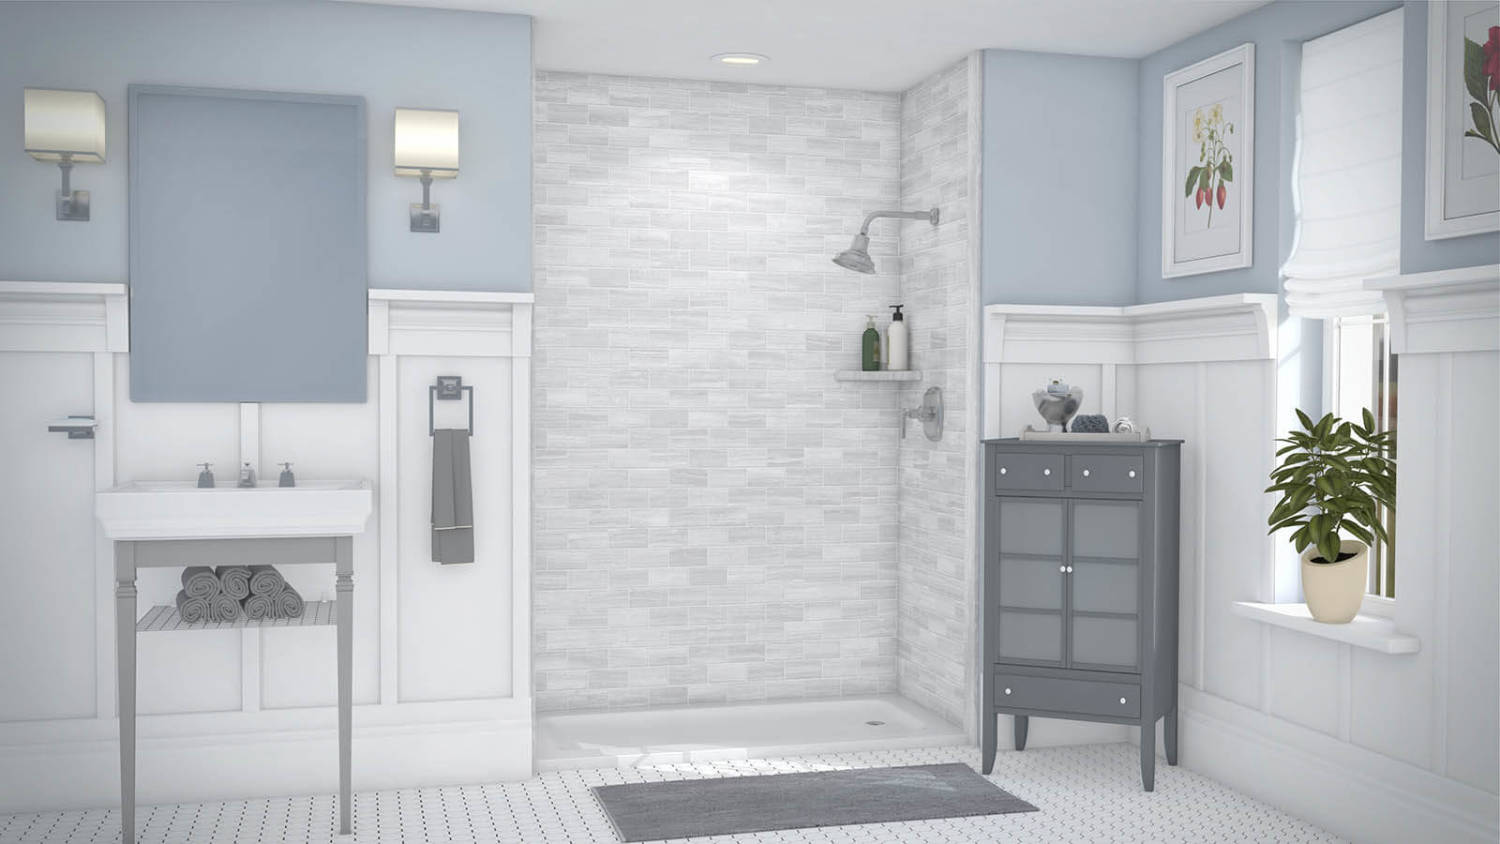 5 Best Bathroom Wall Options